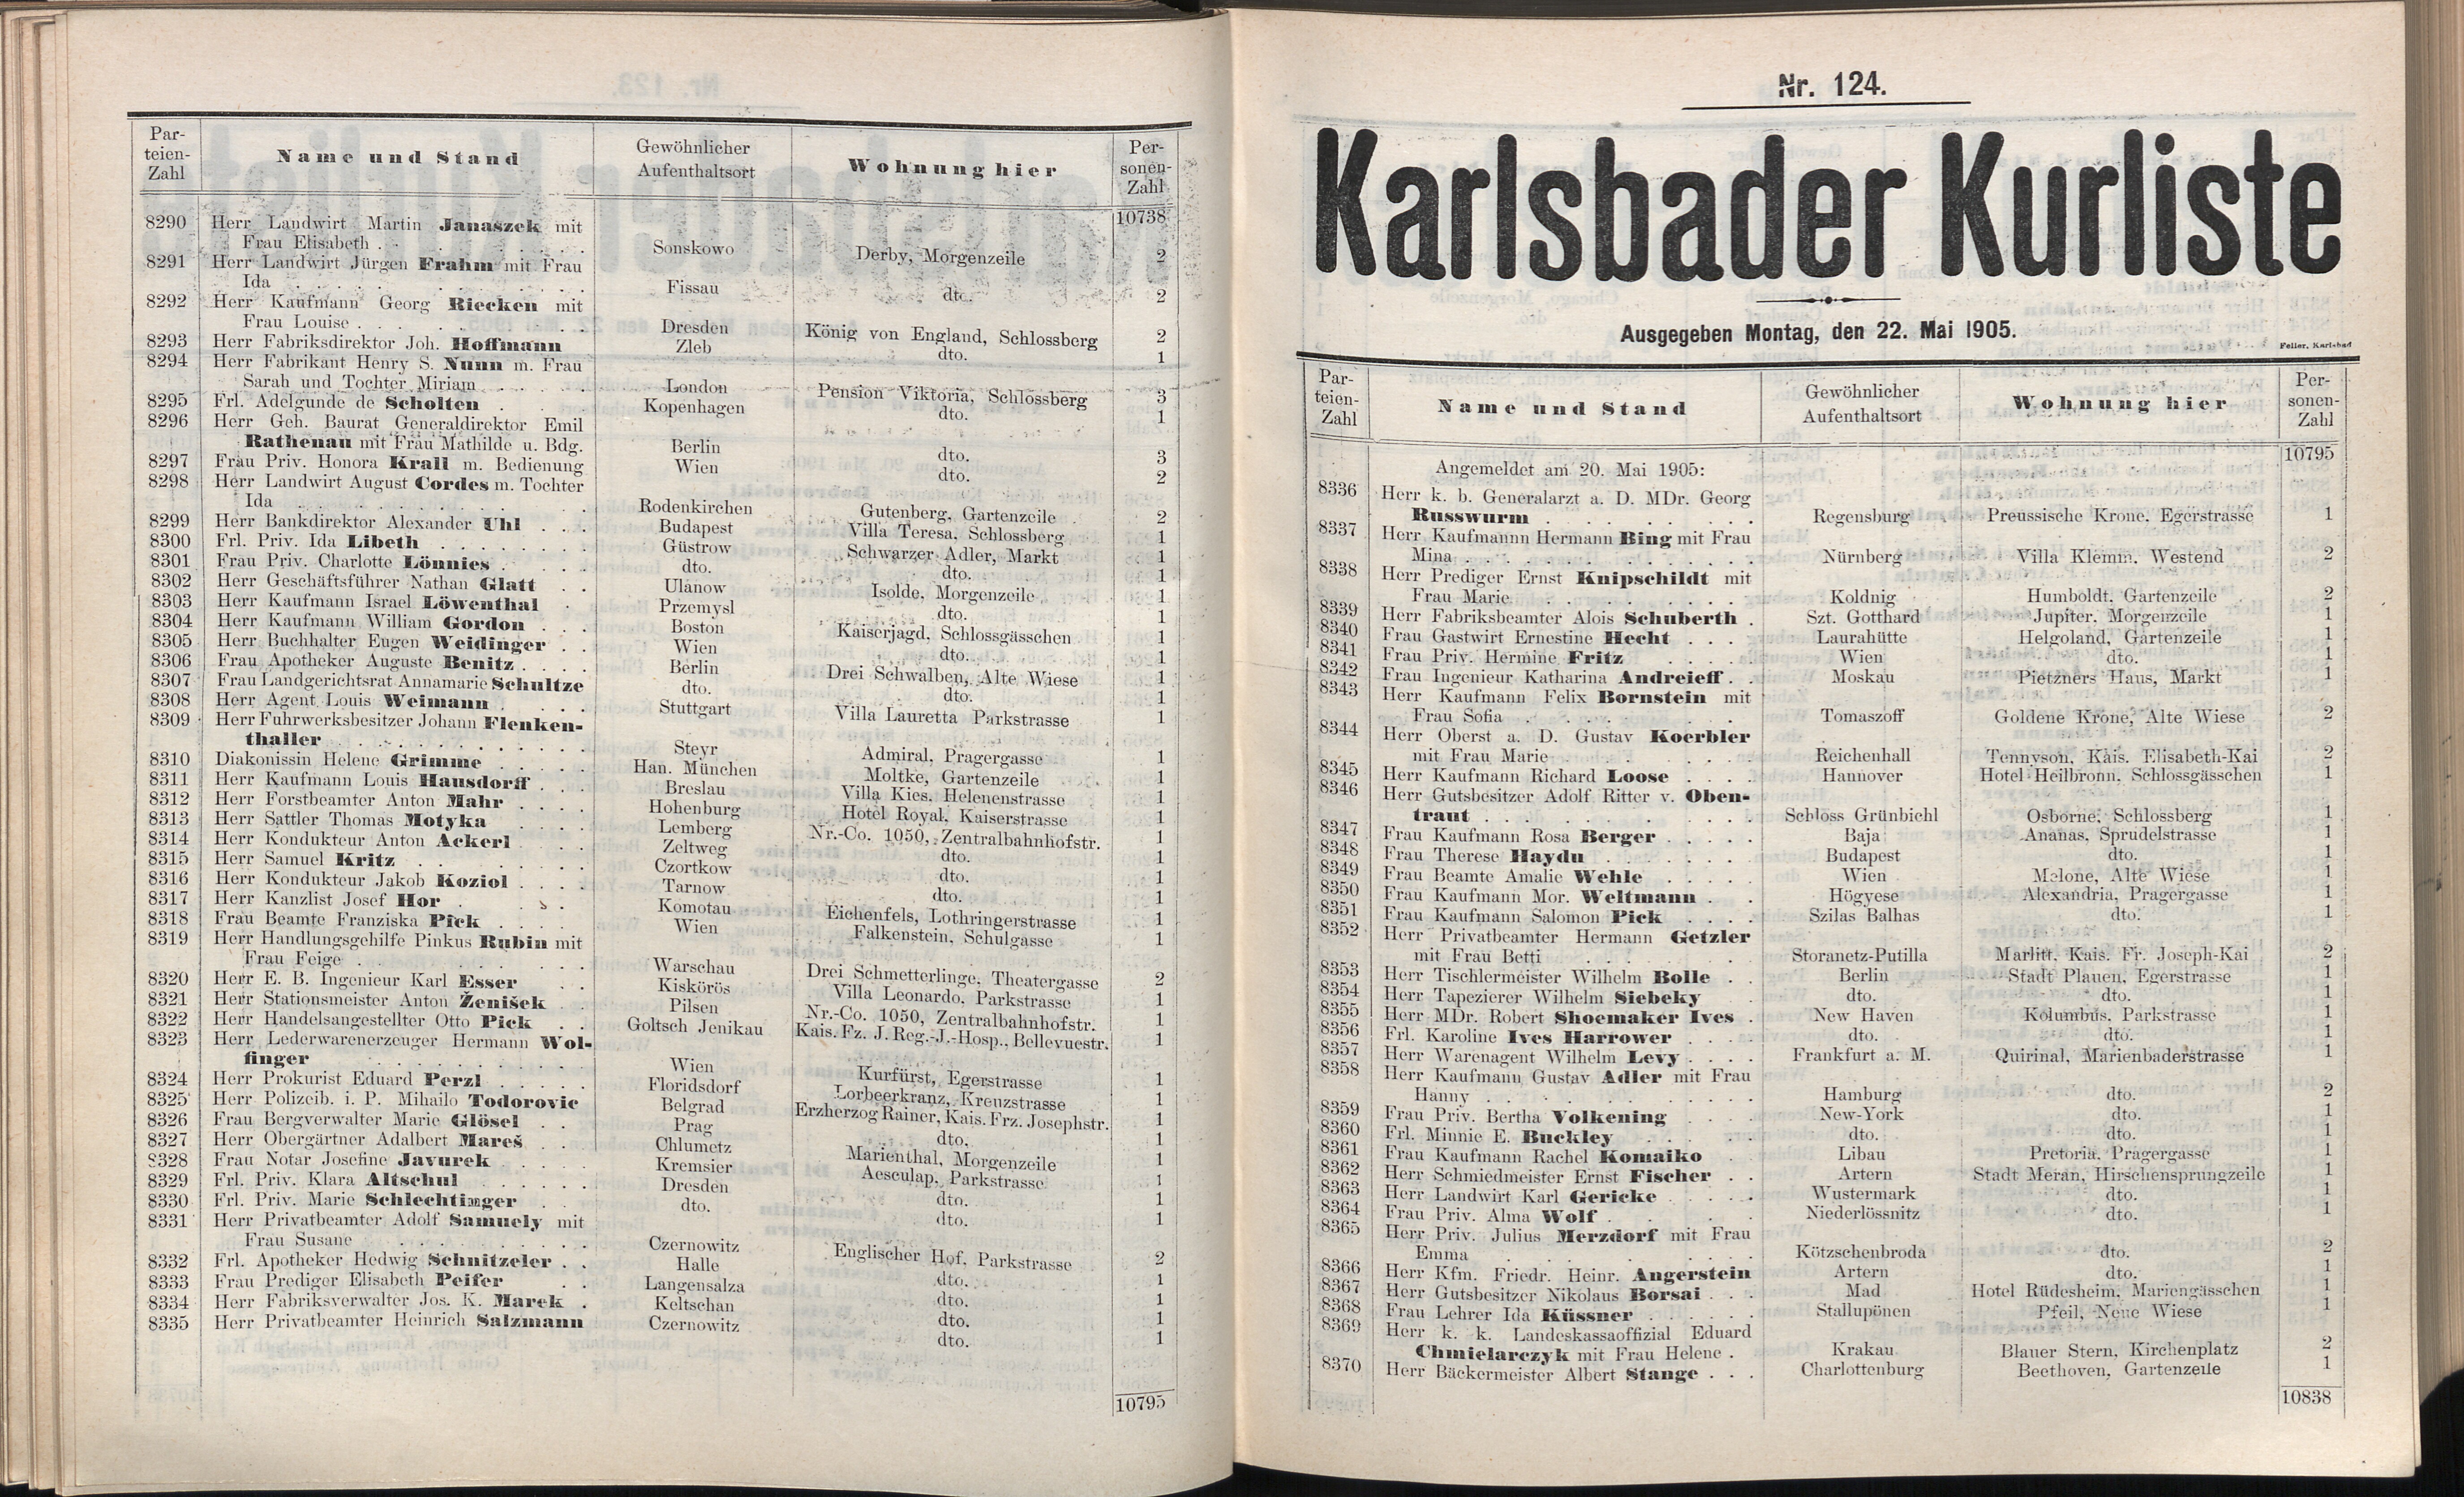 148. soap-kv_knihovna_karlsbader-kurliste-1905_1490